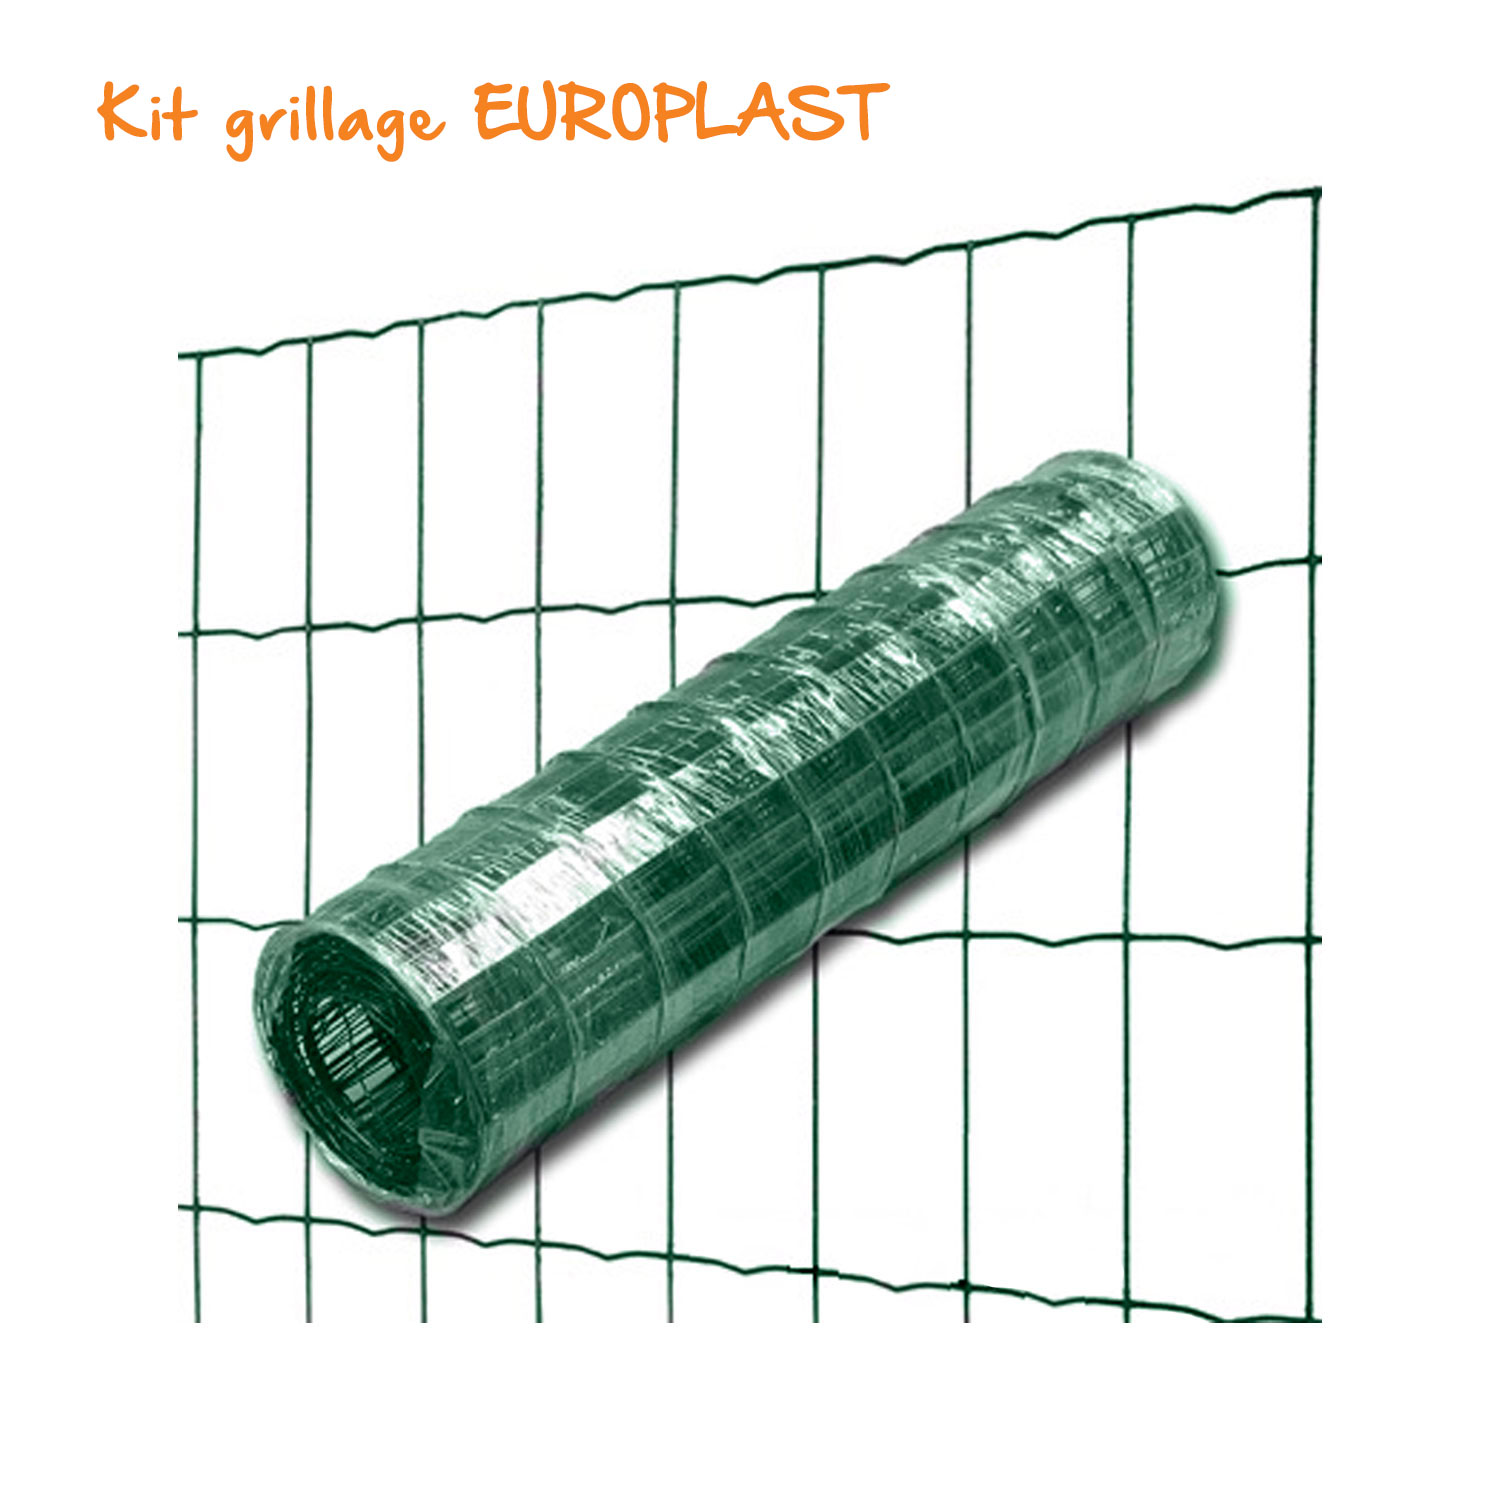 Kit grillage soudé EUROPLAST 100 x 50 mm - Ø 2,1 mm - Lg. 25 m vert